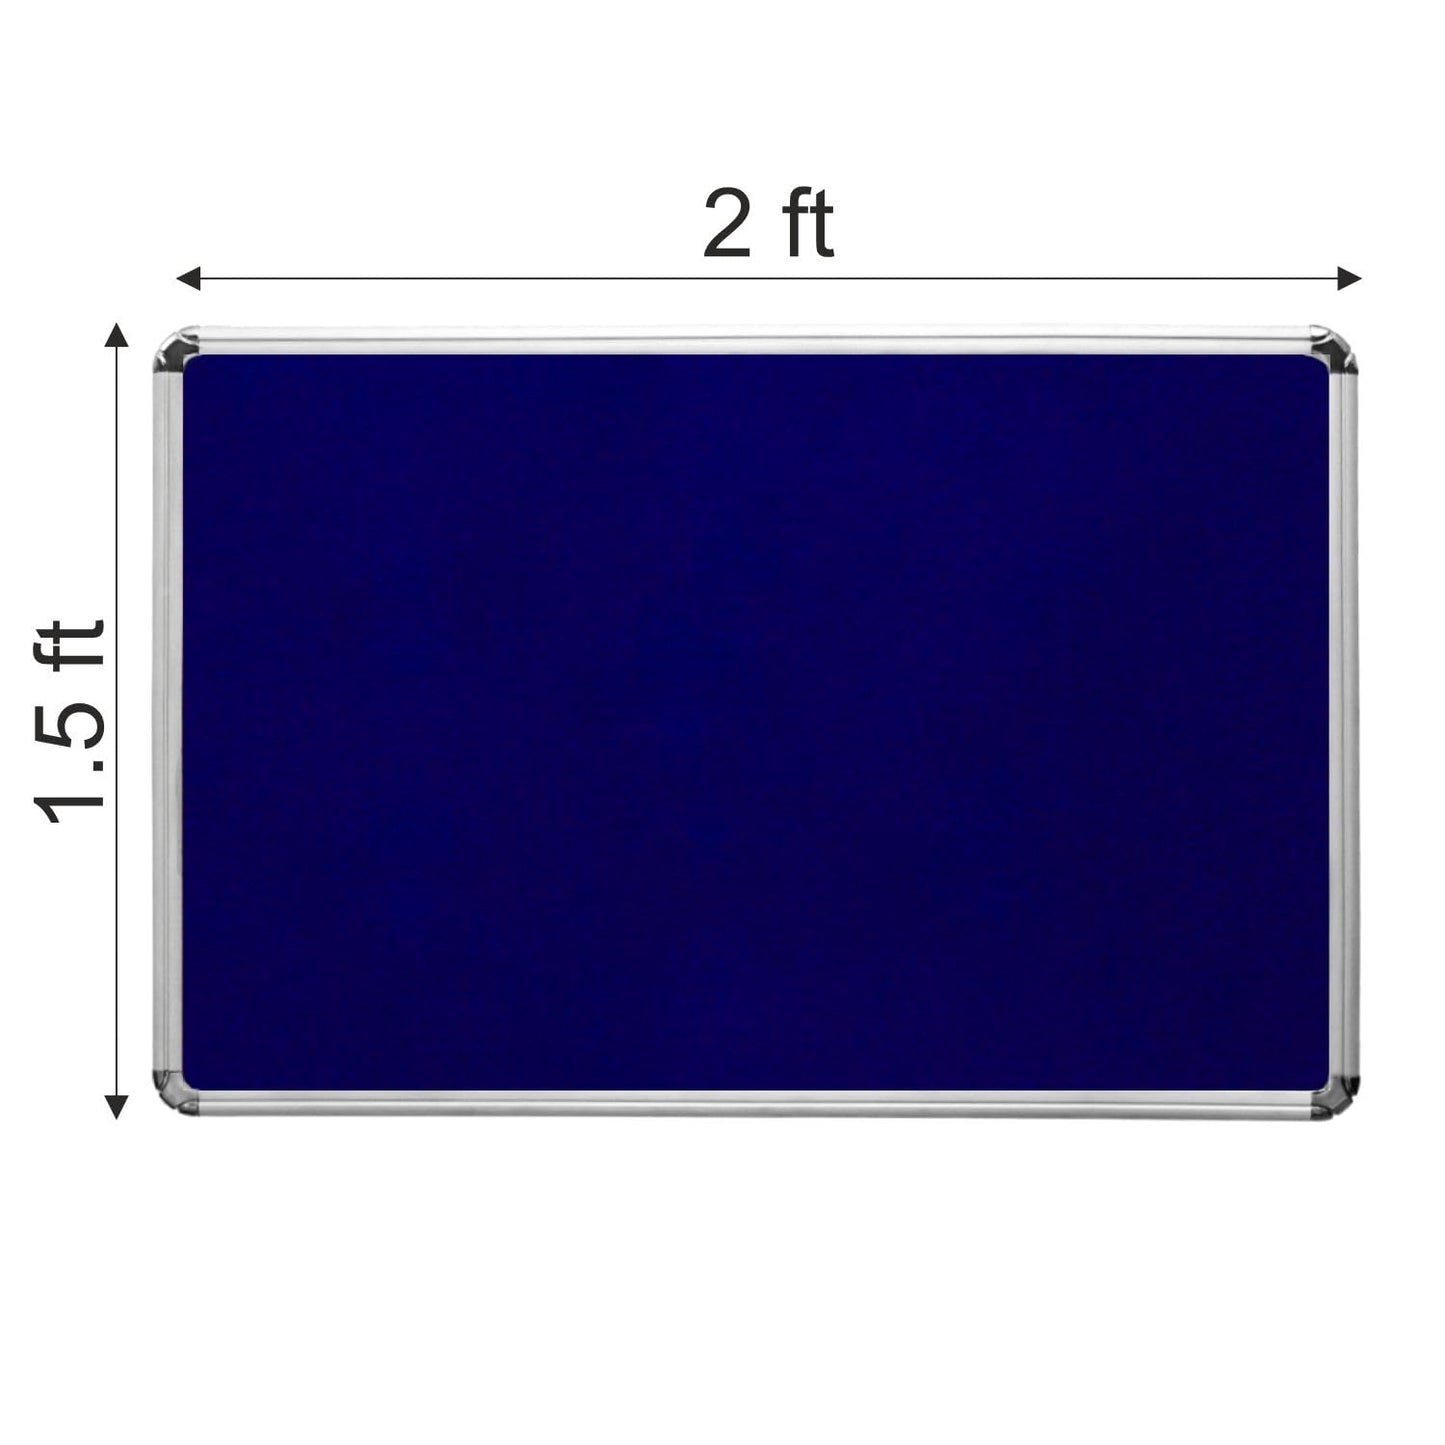 Digismart Noticeboard Nova Channel (Blue) for Office, Home & School Aluminum Frame (Pack of 1) (Non Magnetic)